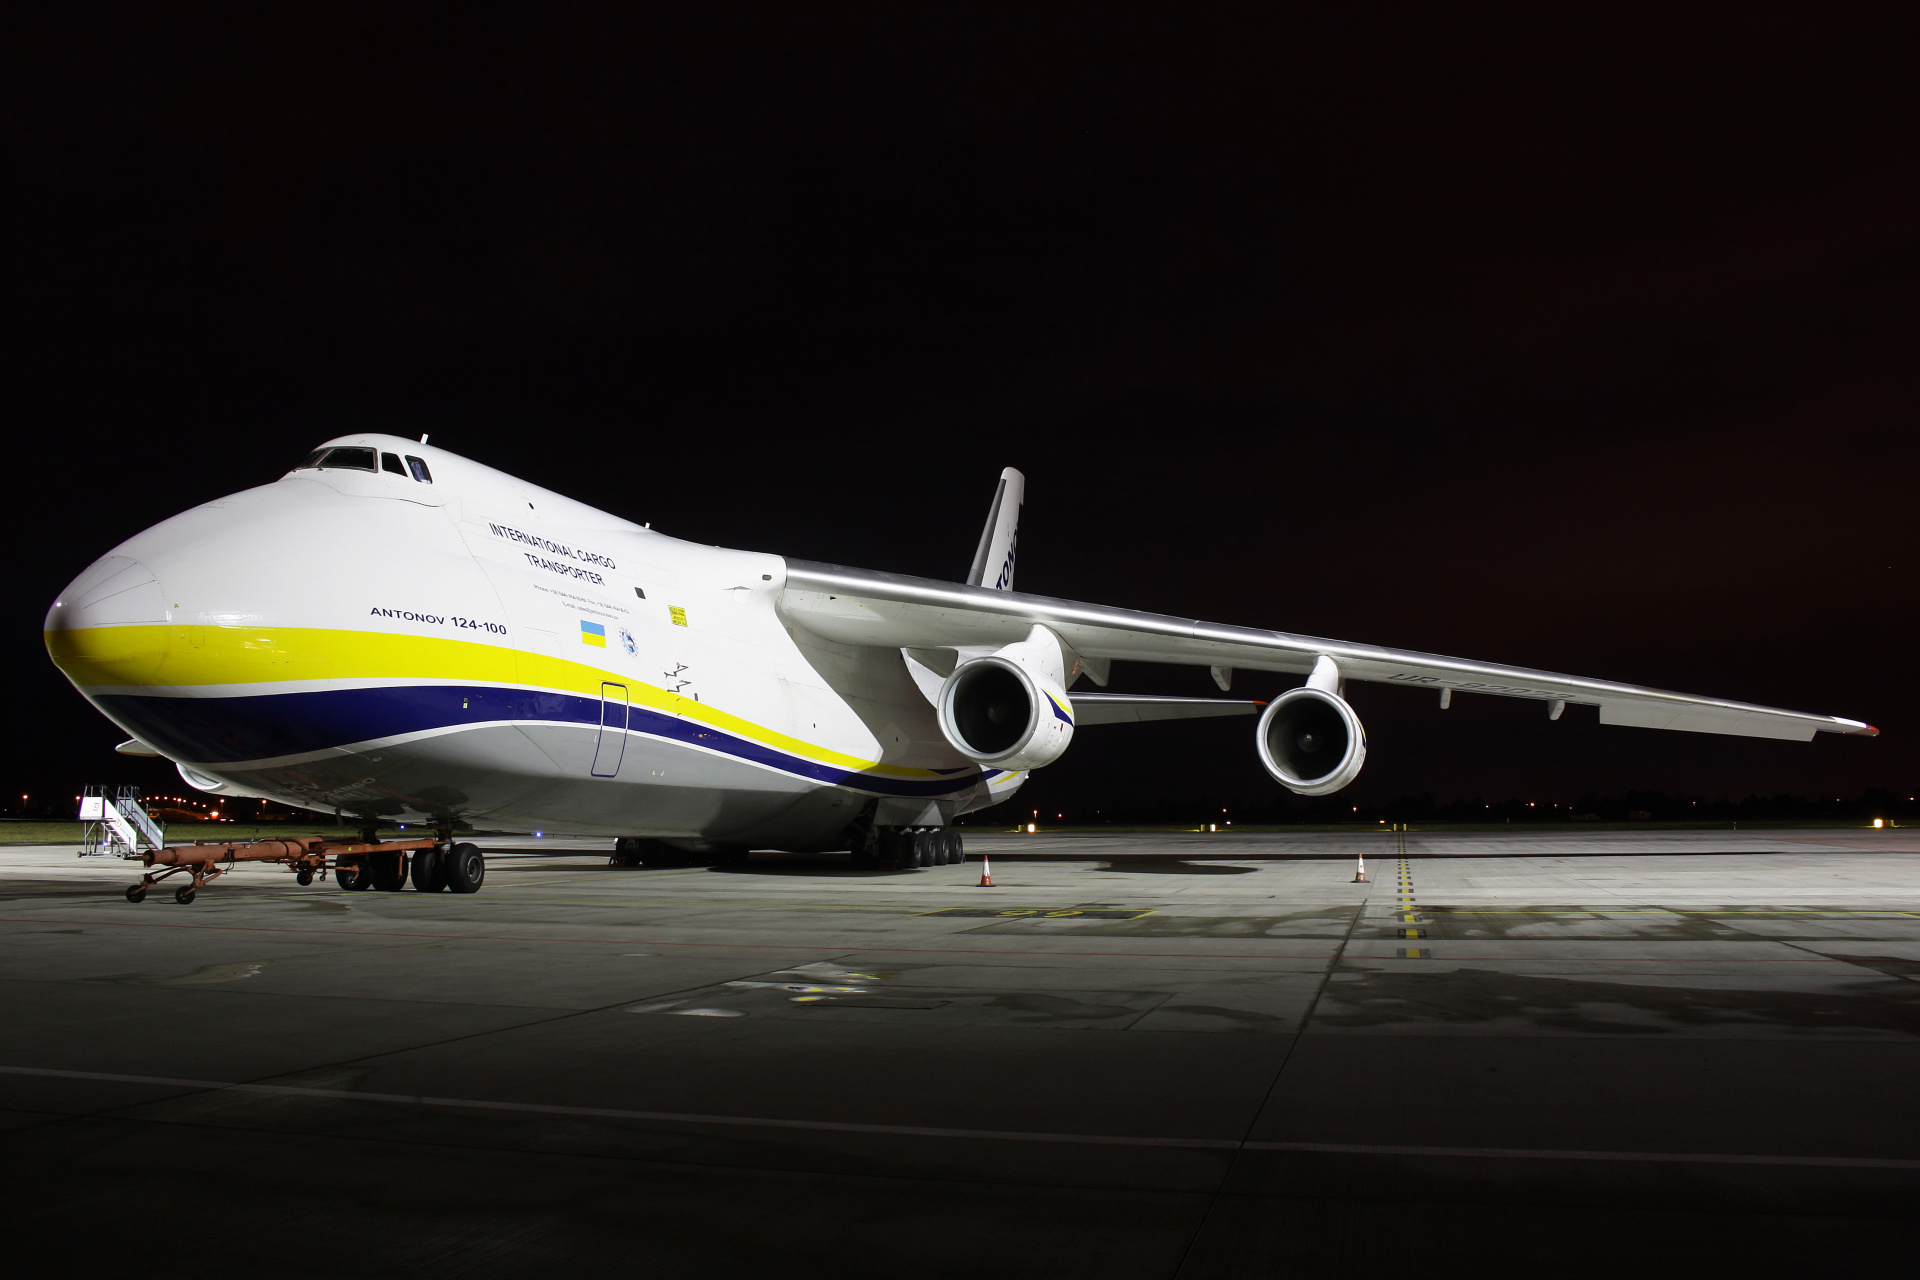 UR-82073 (new livery) (Aircraft » EPWA Spotting » Antonov An-124-100 Ruslan » Antonov Airlines)